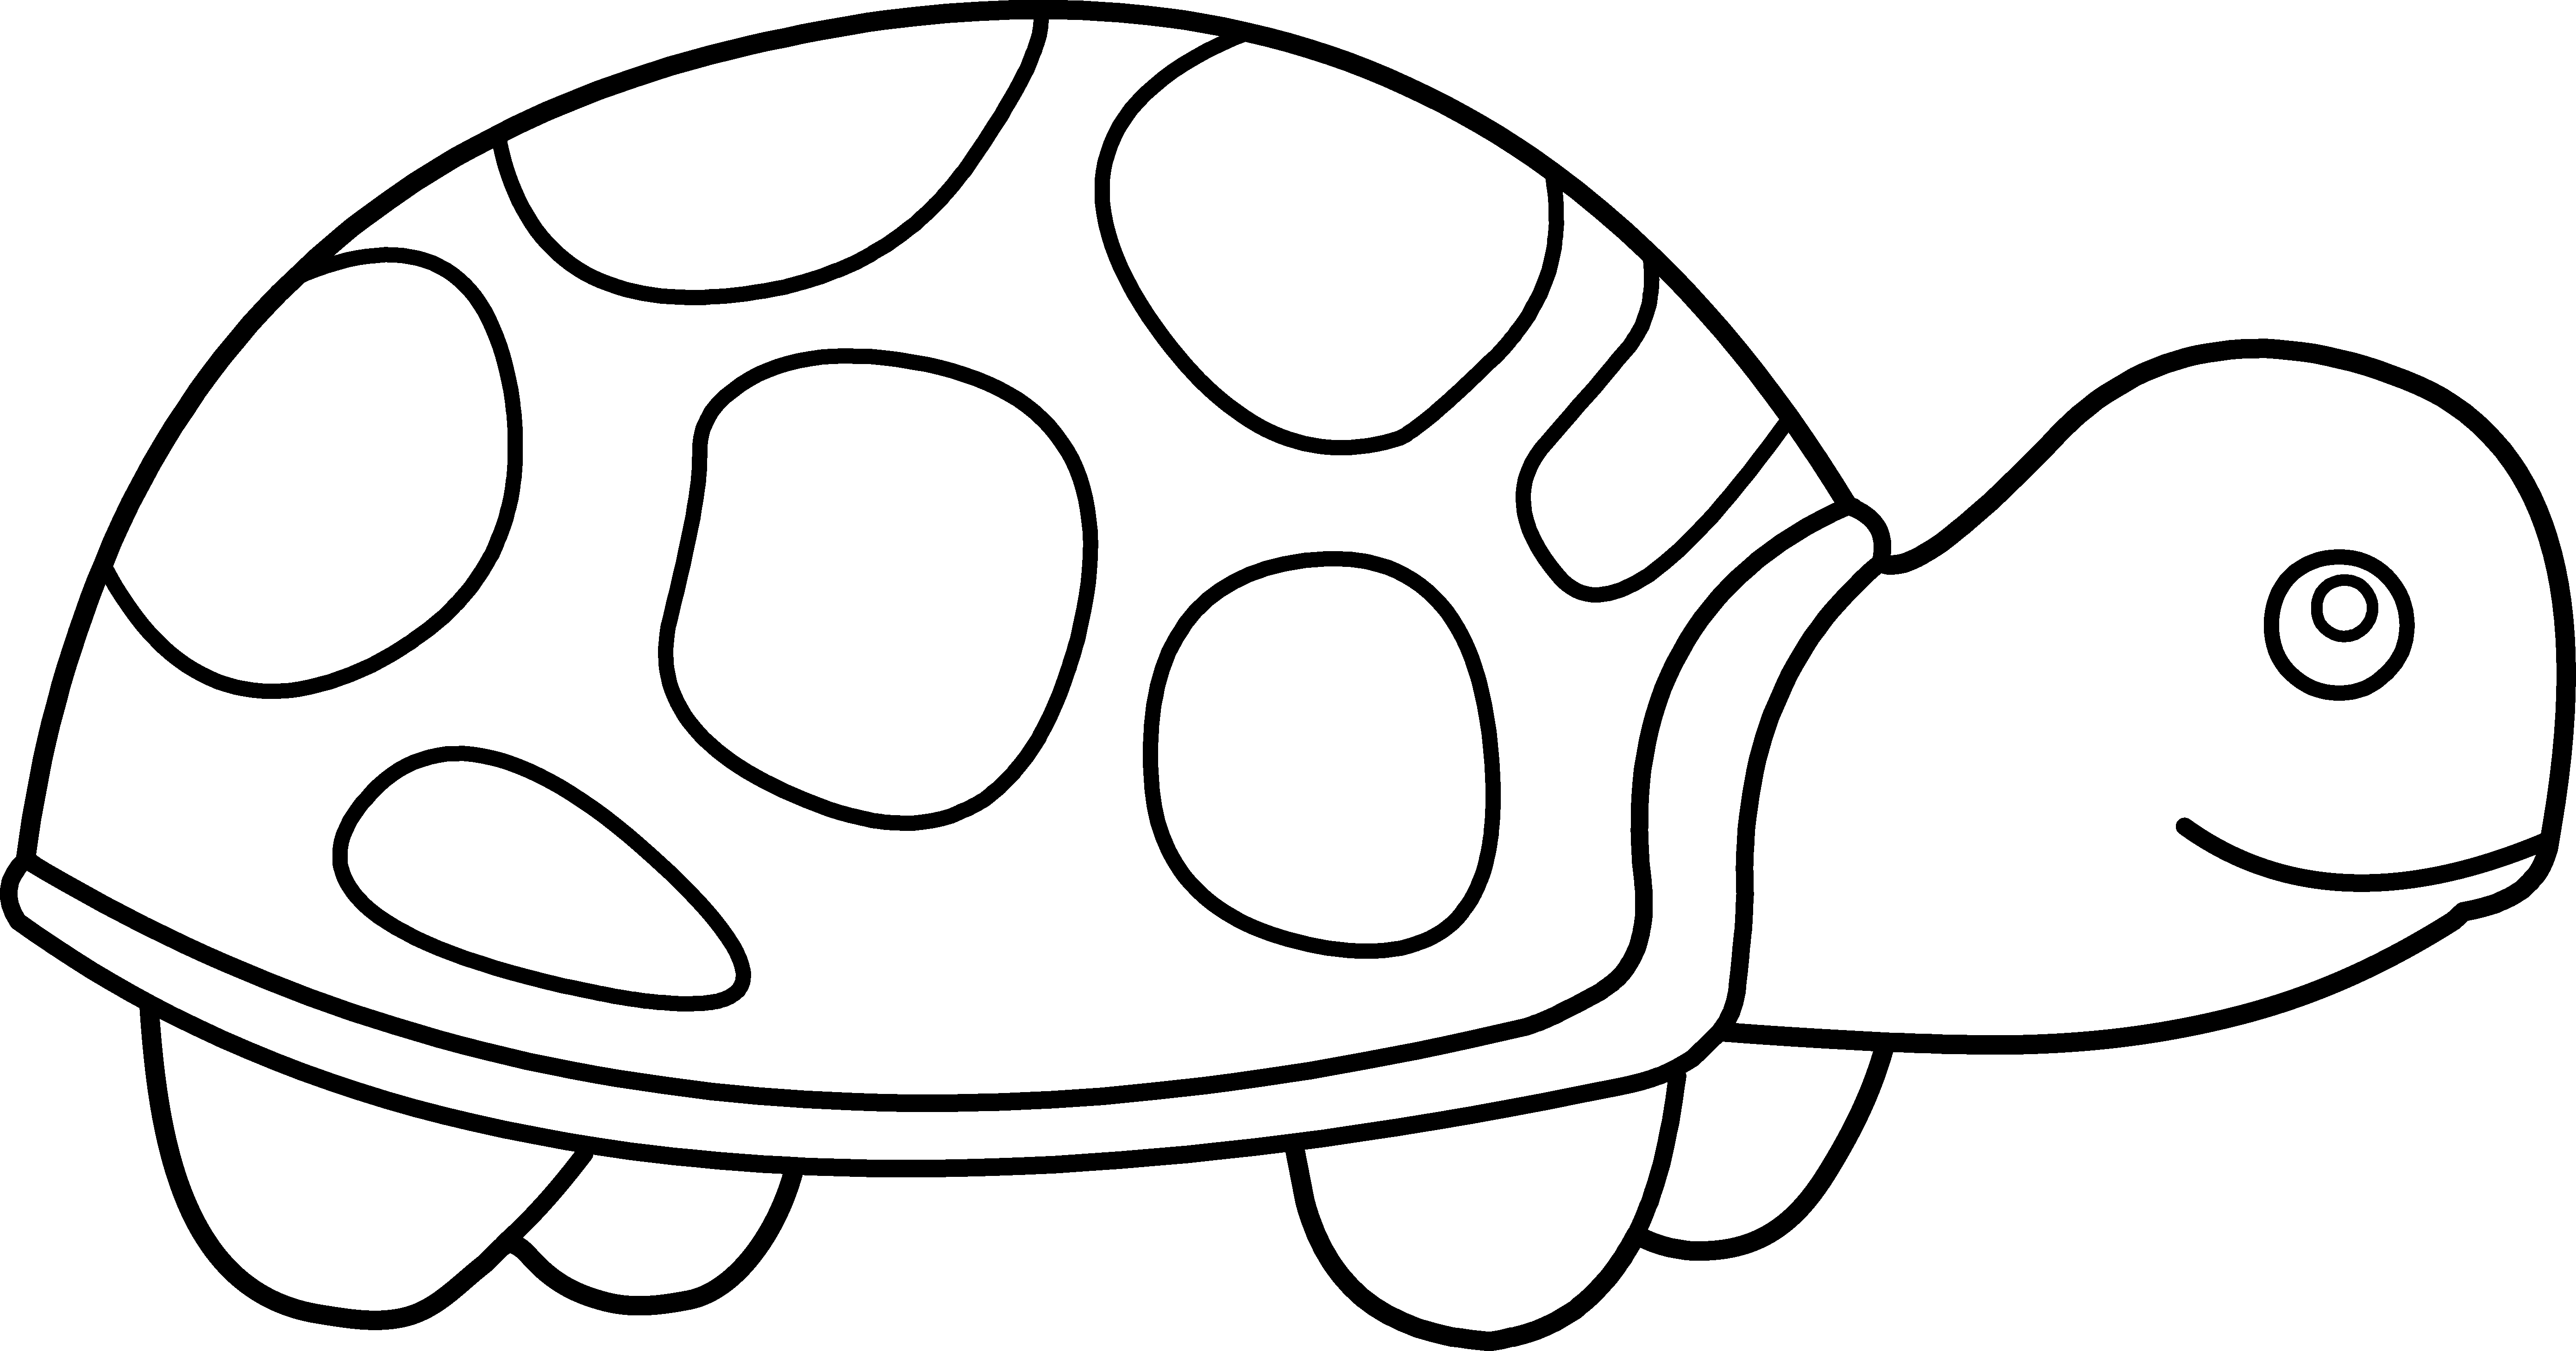 Black and White Turtle Clip Art Free